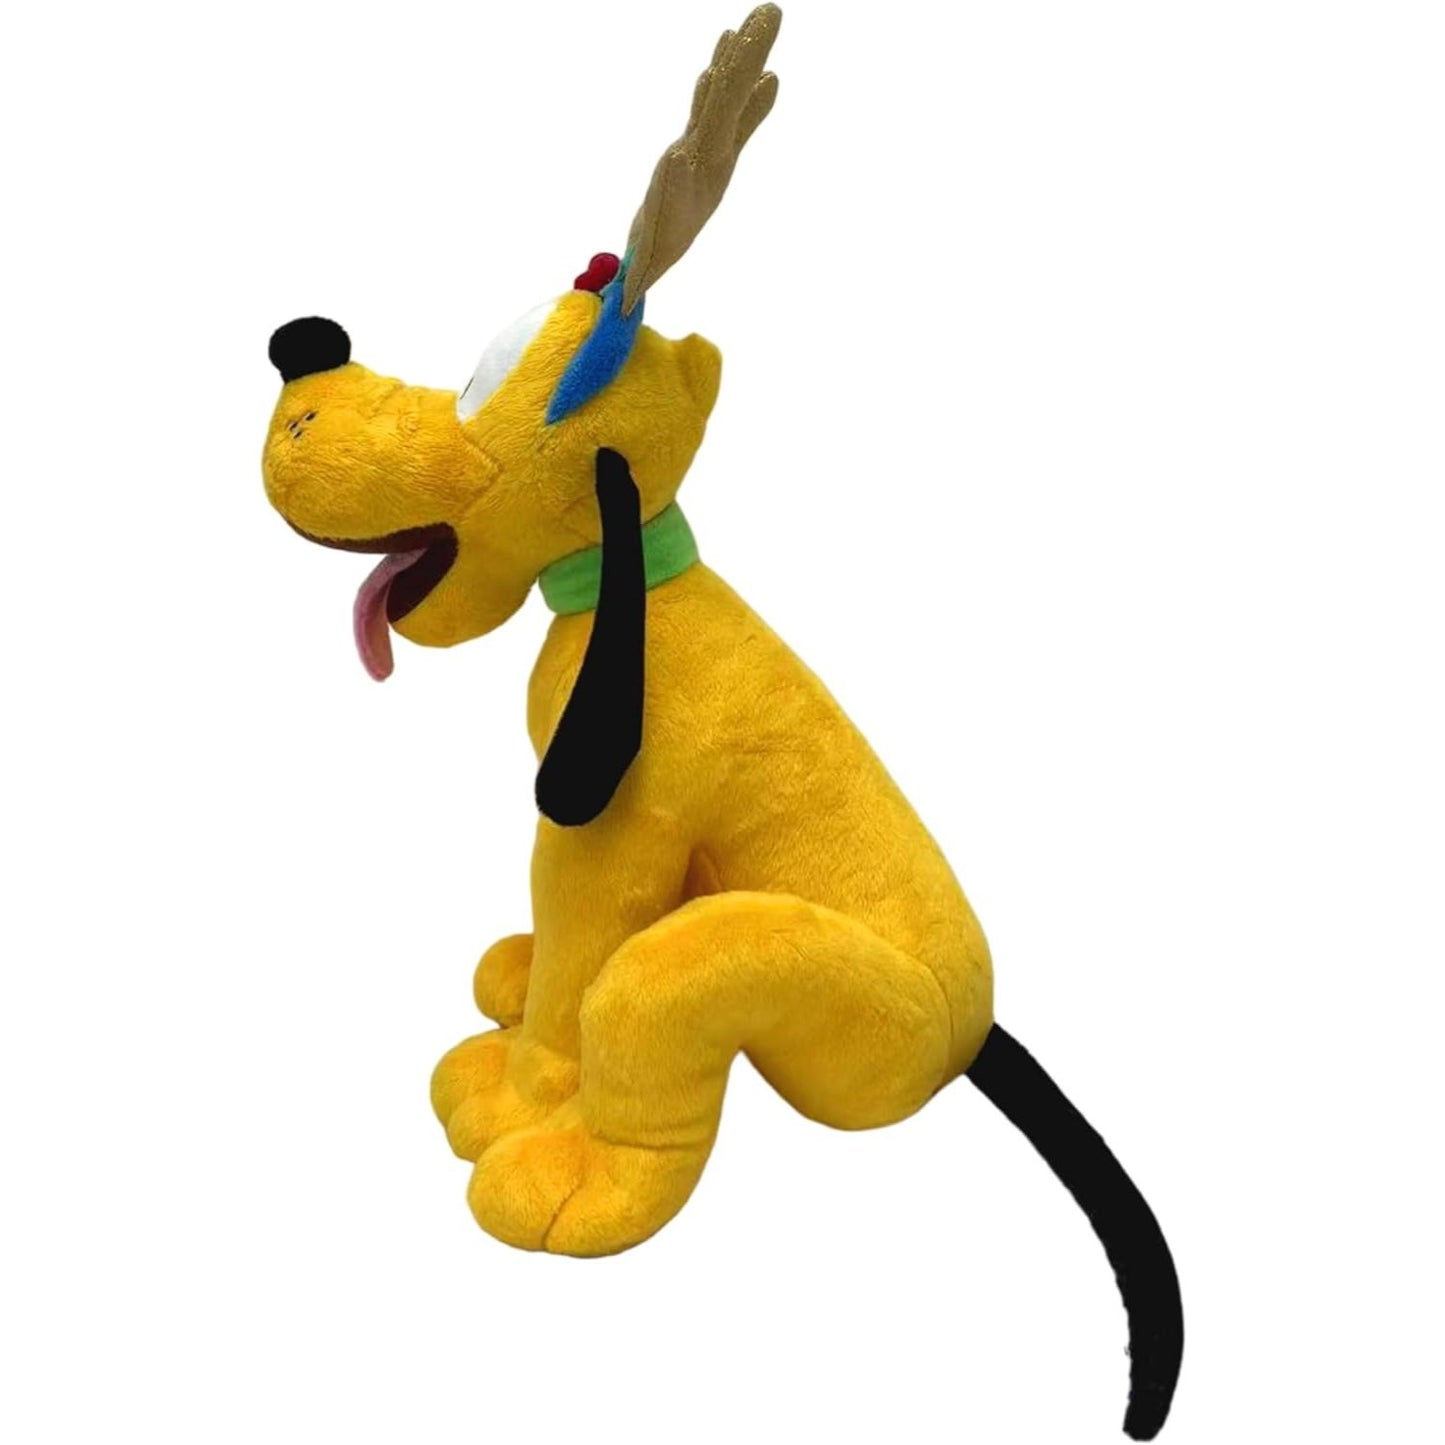 Disney - Pluto - Christmas Plush Toy - Small